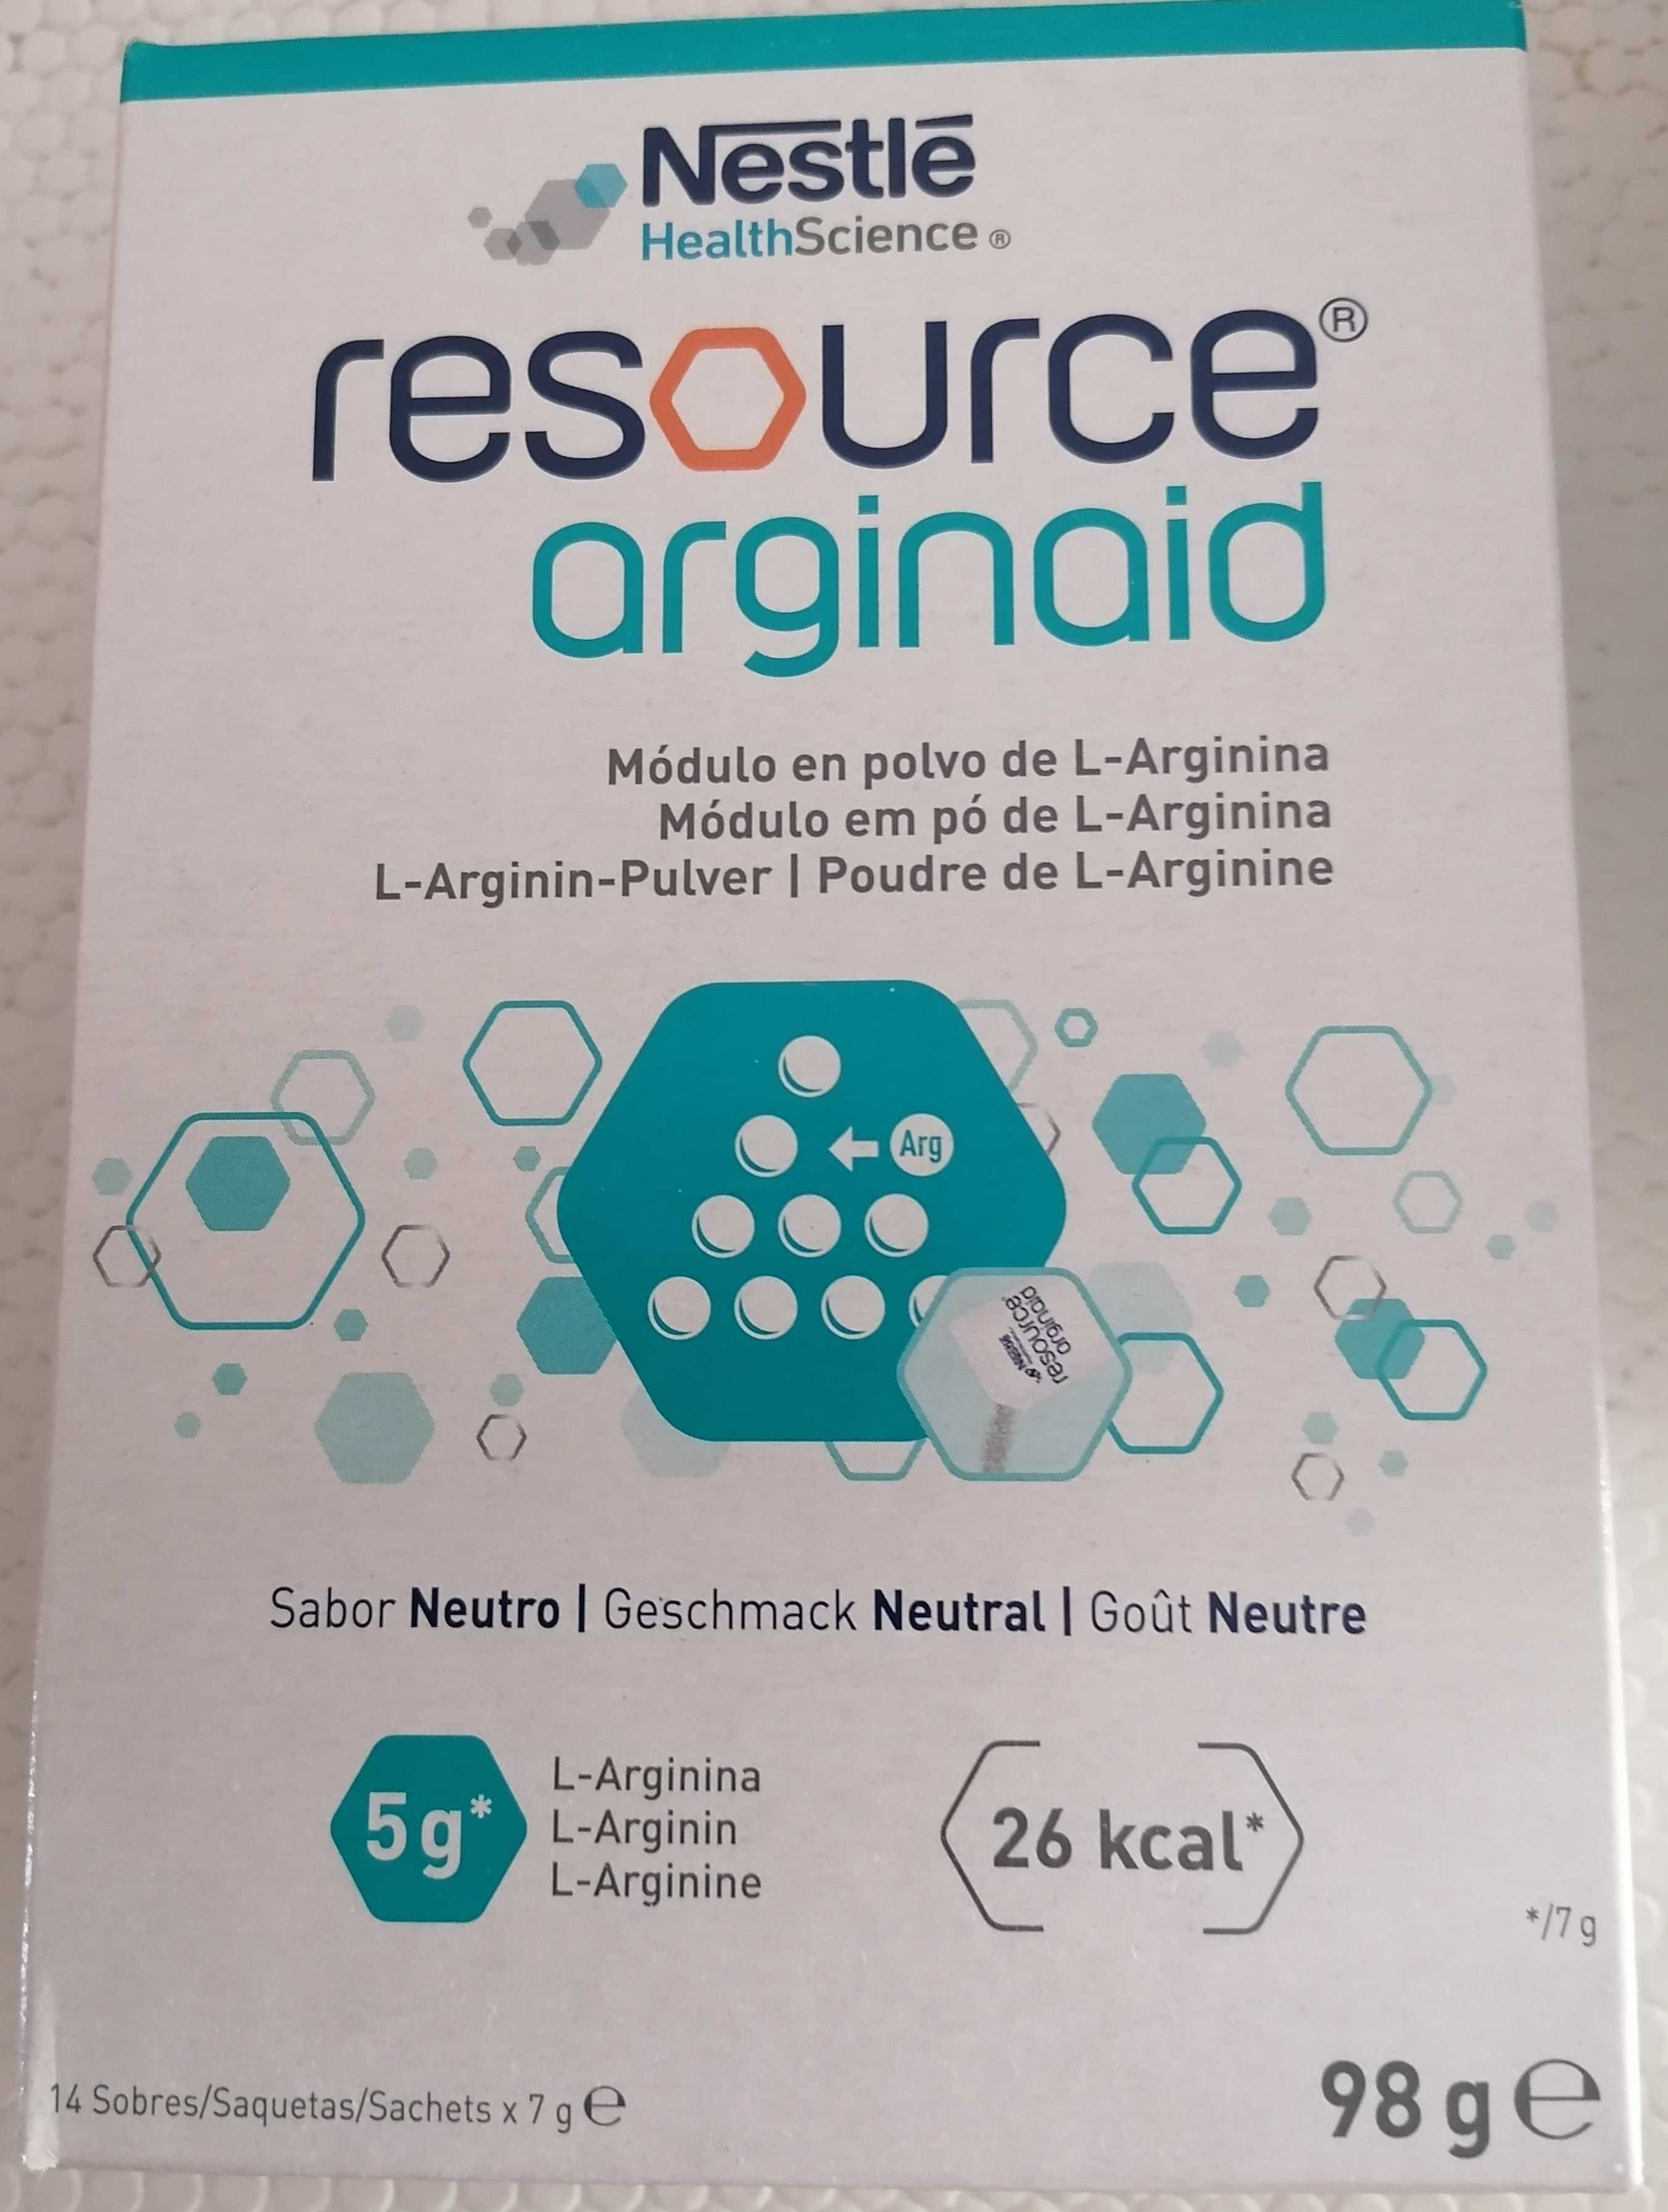 Suplemento Ressource Arginaid, cada 15€ (oferta de portes)